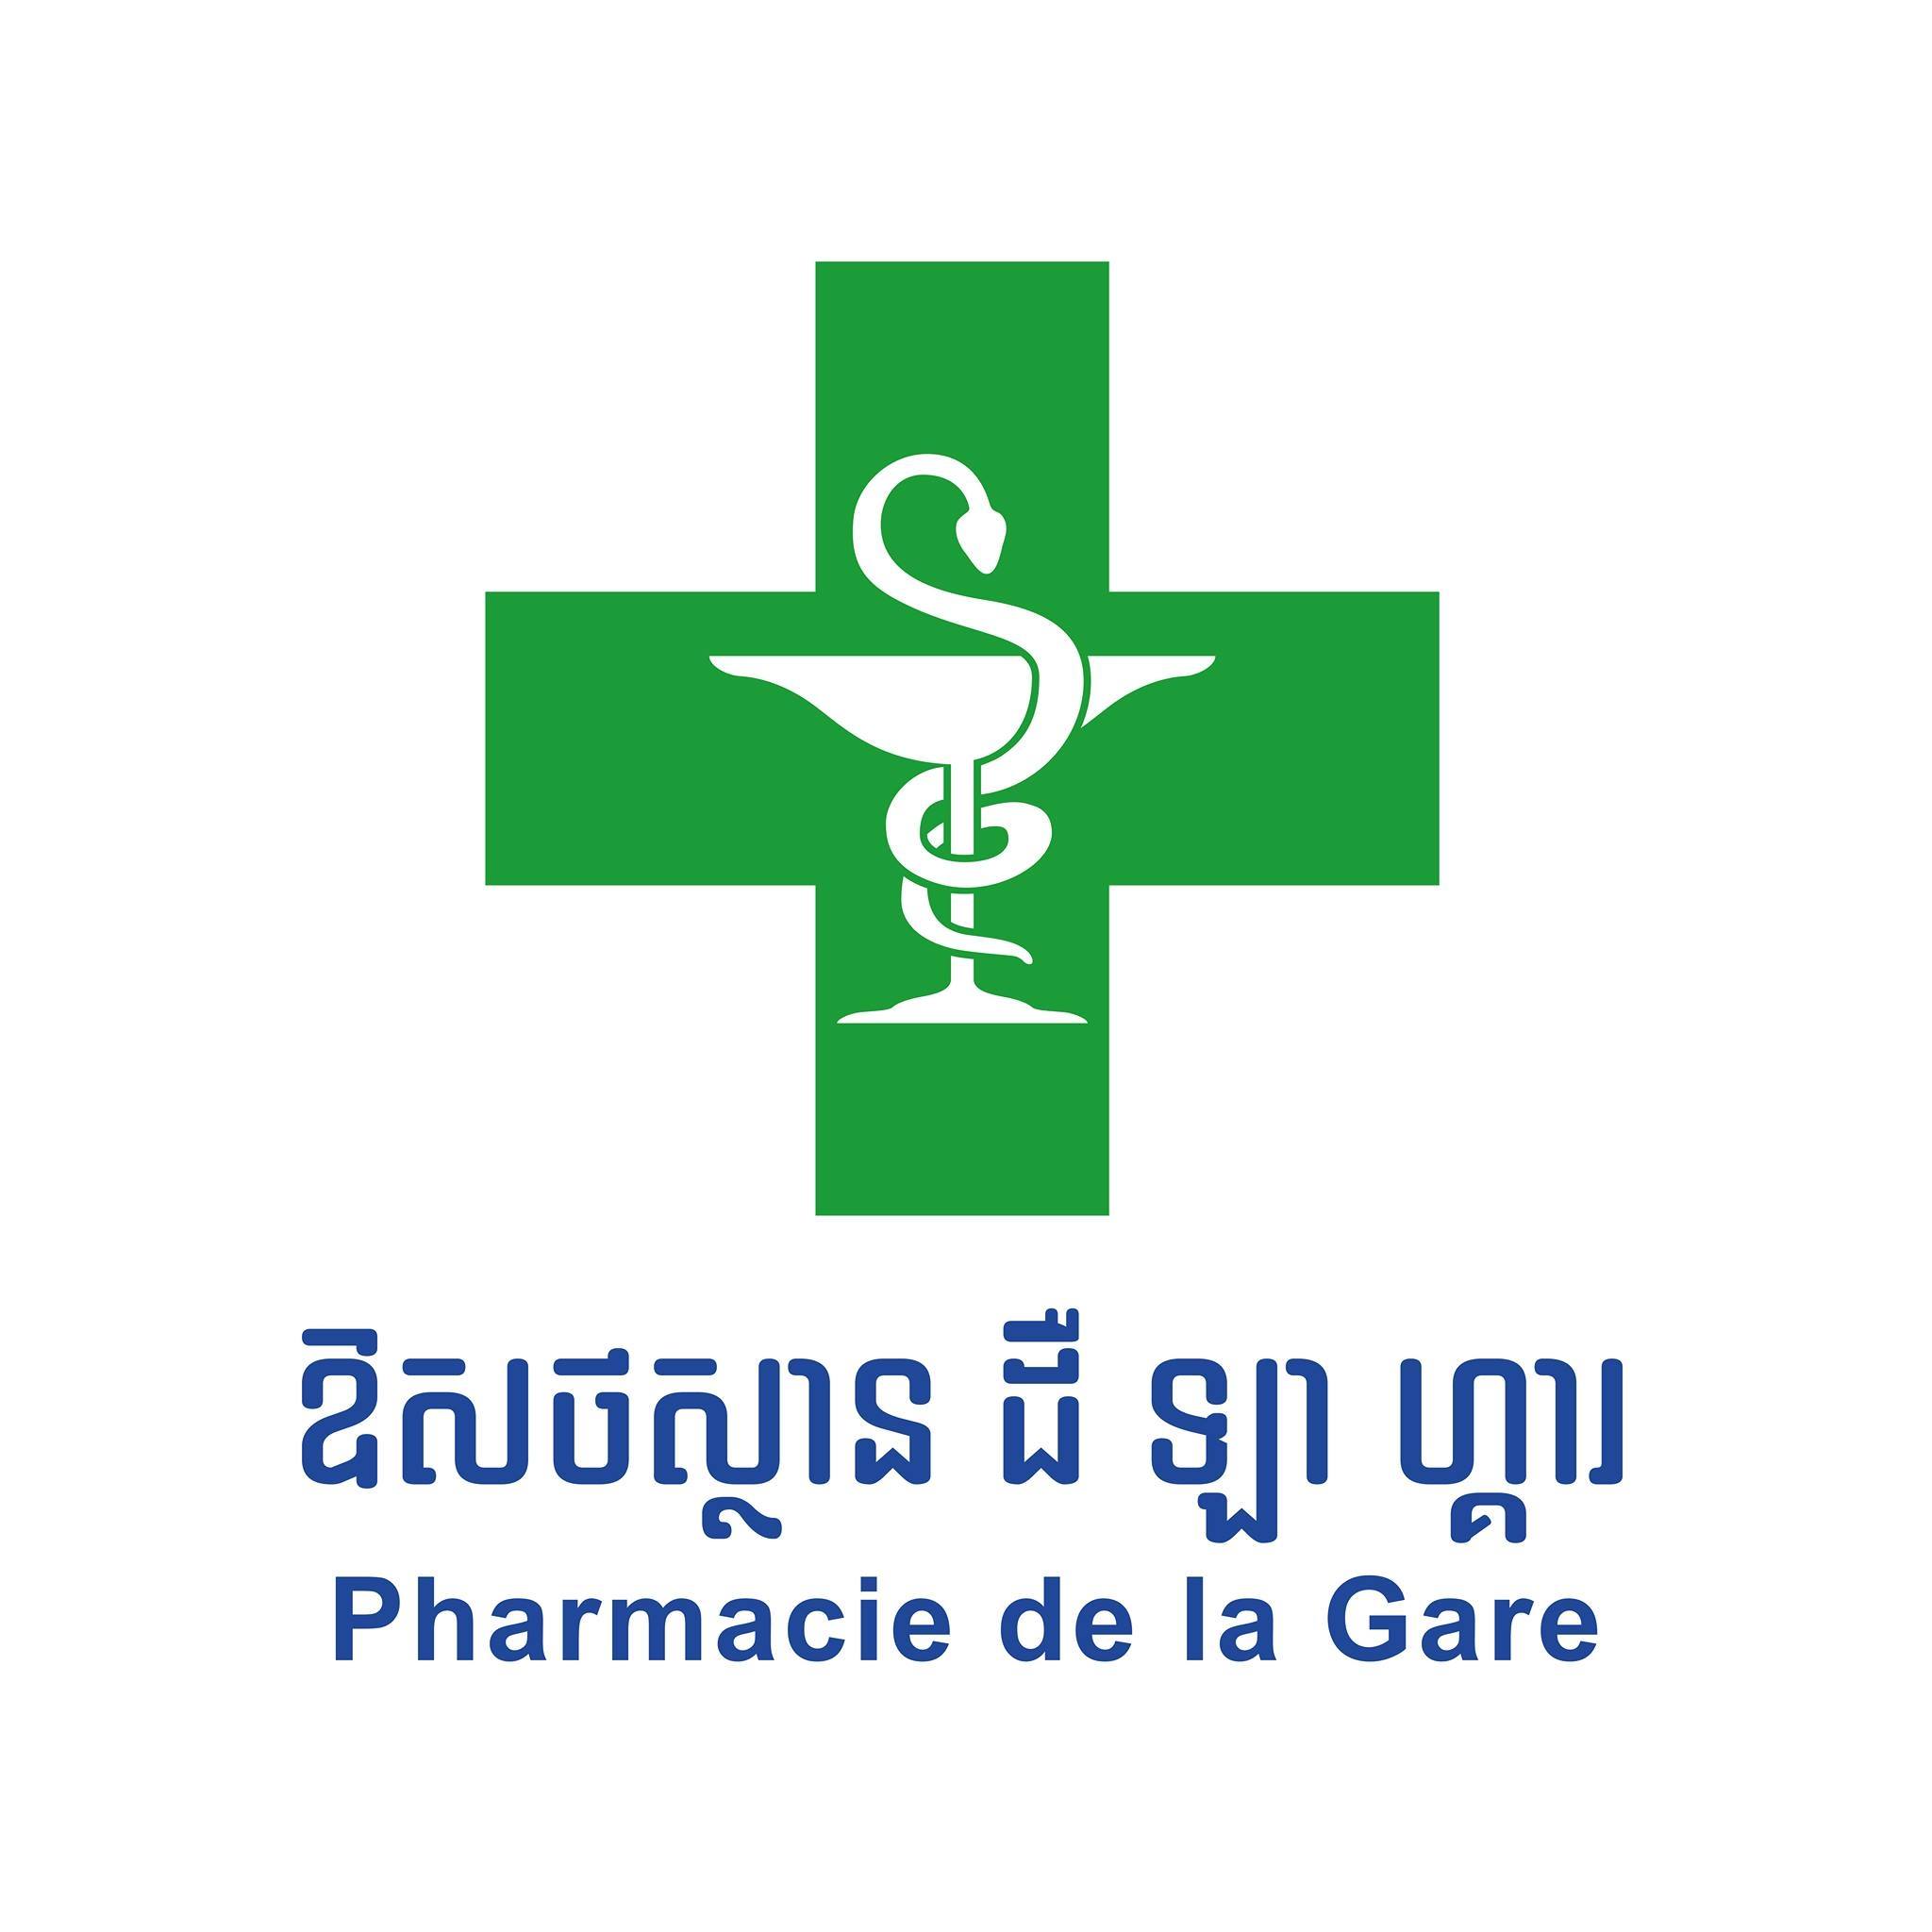 Pharmacie de la Gare – ឱសថស្ថាន ដឺ ឡា ហ្គារ